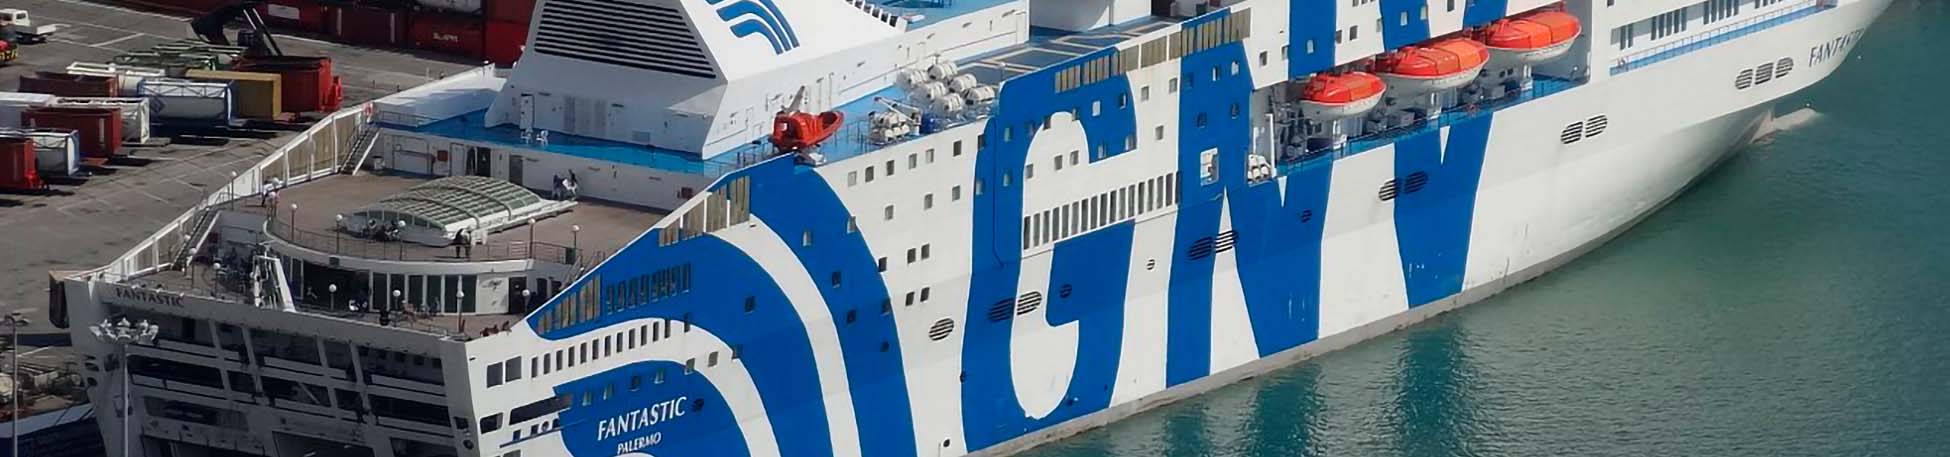 Resource image of the destination port Tanger Med for the ferry route Genova - Tanger Med